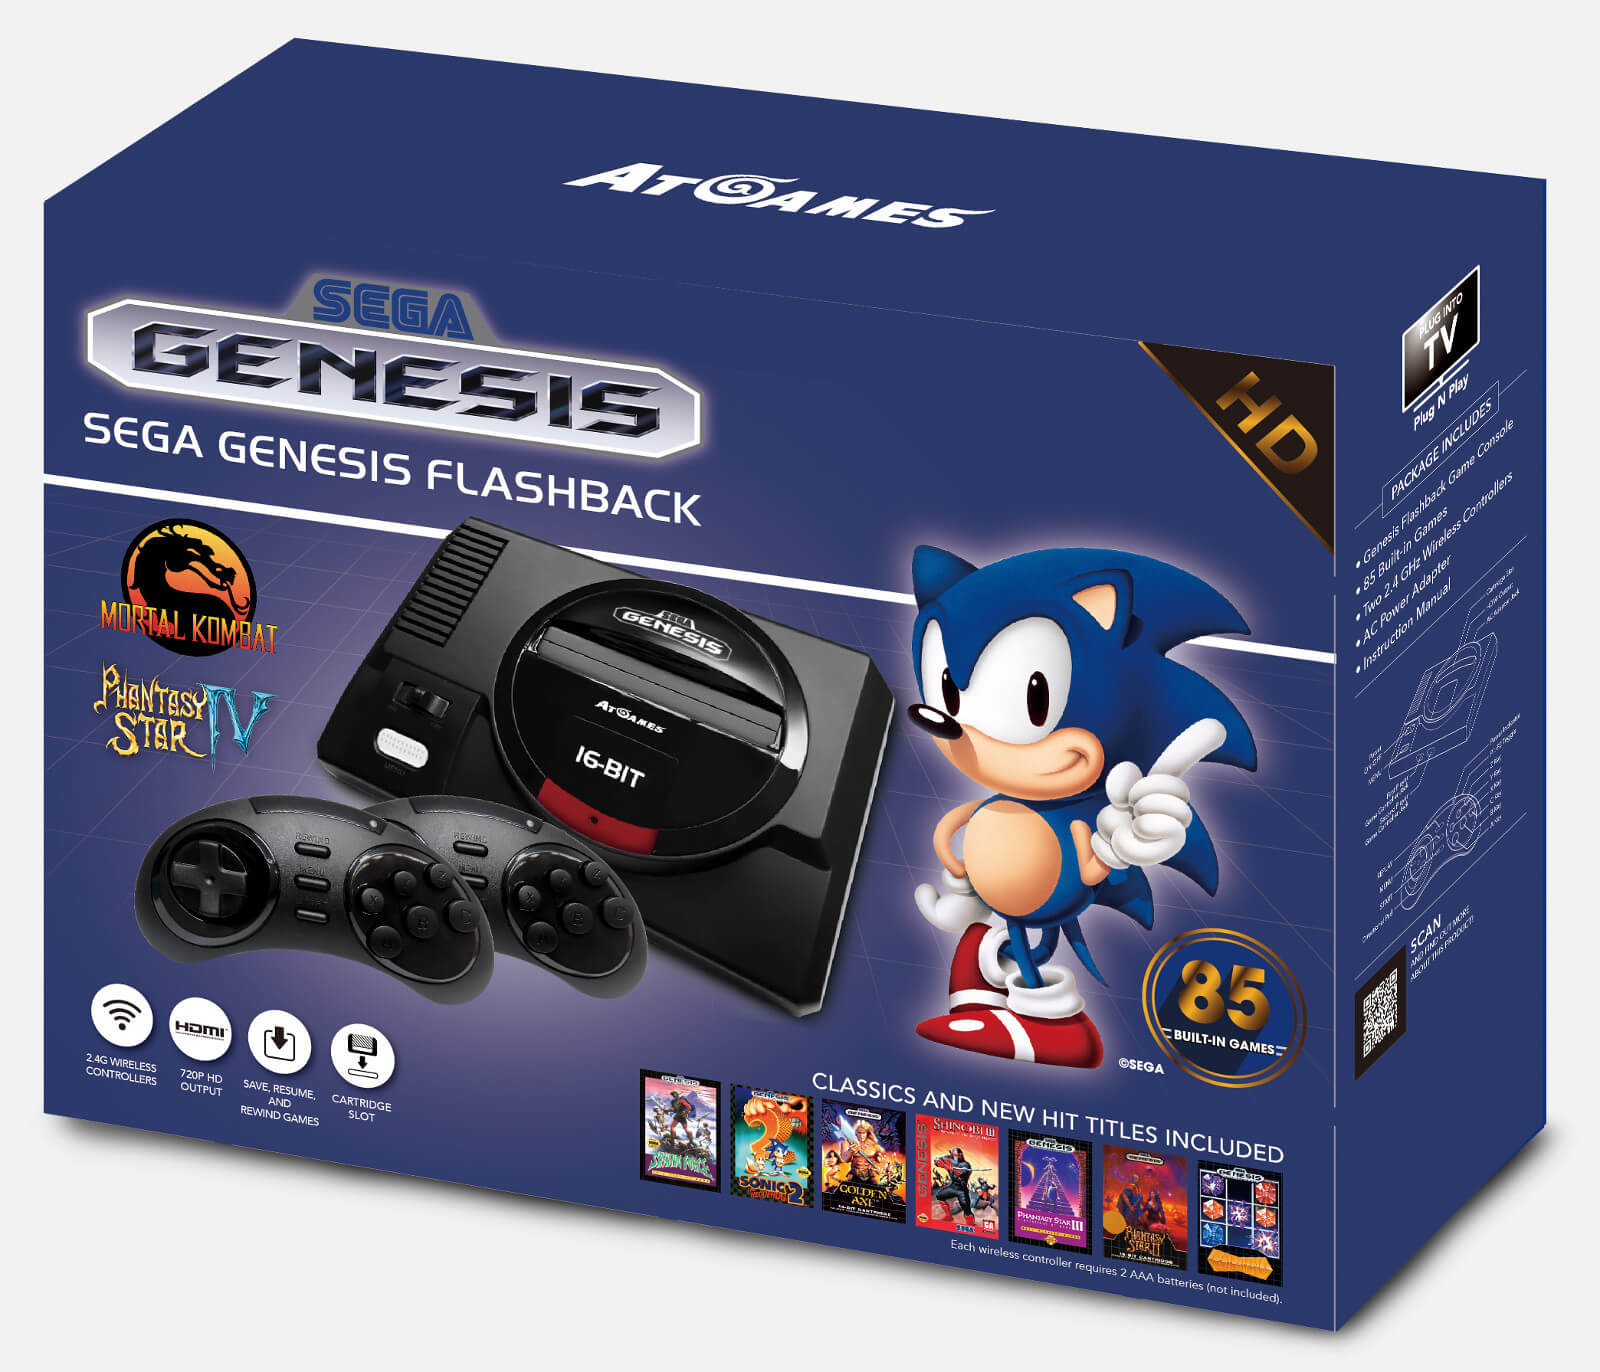 Caixa do Sega Genesis Flasback